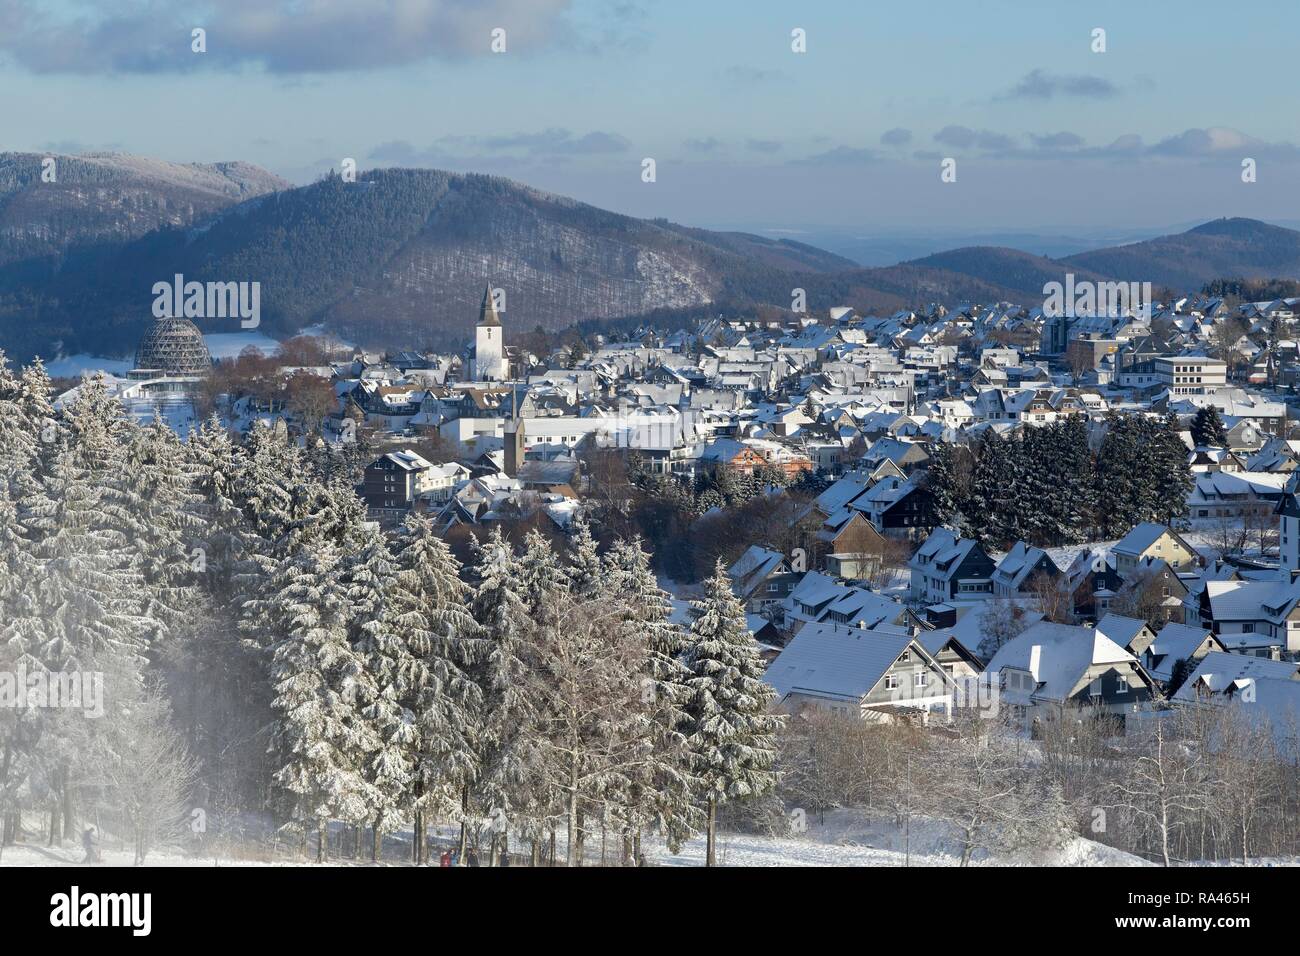 Winter mountain with snow, Sauerland, North Rhine-Westphalia, Germany Stock Photo